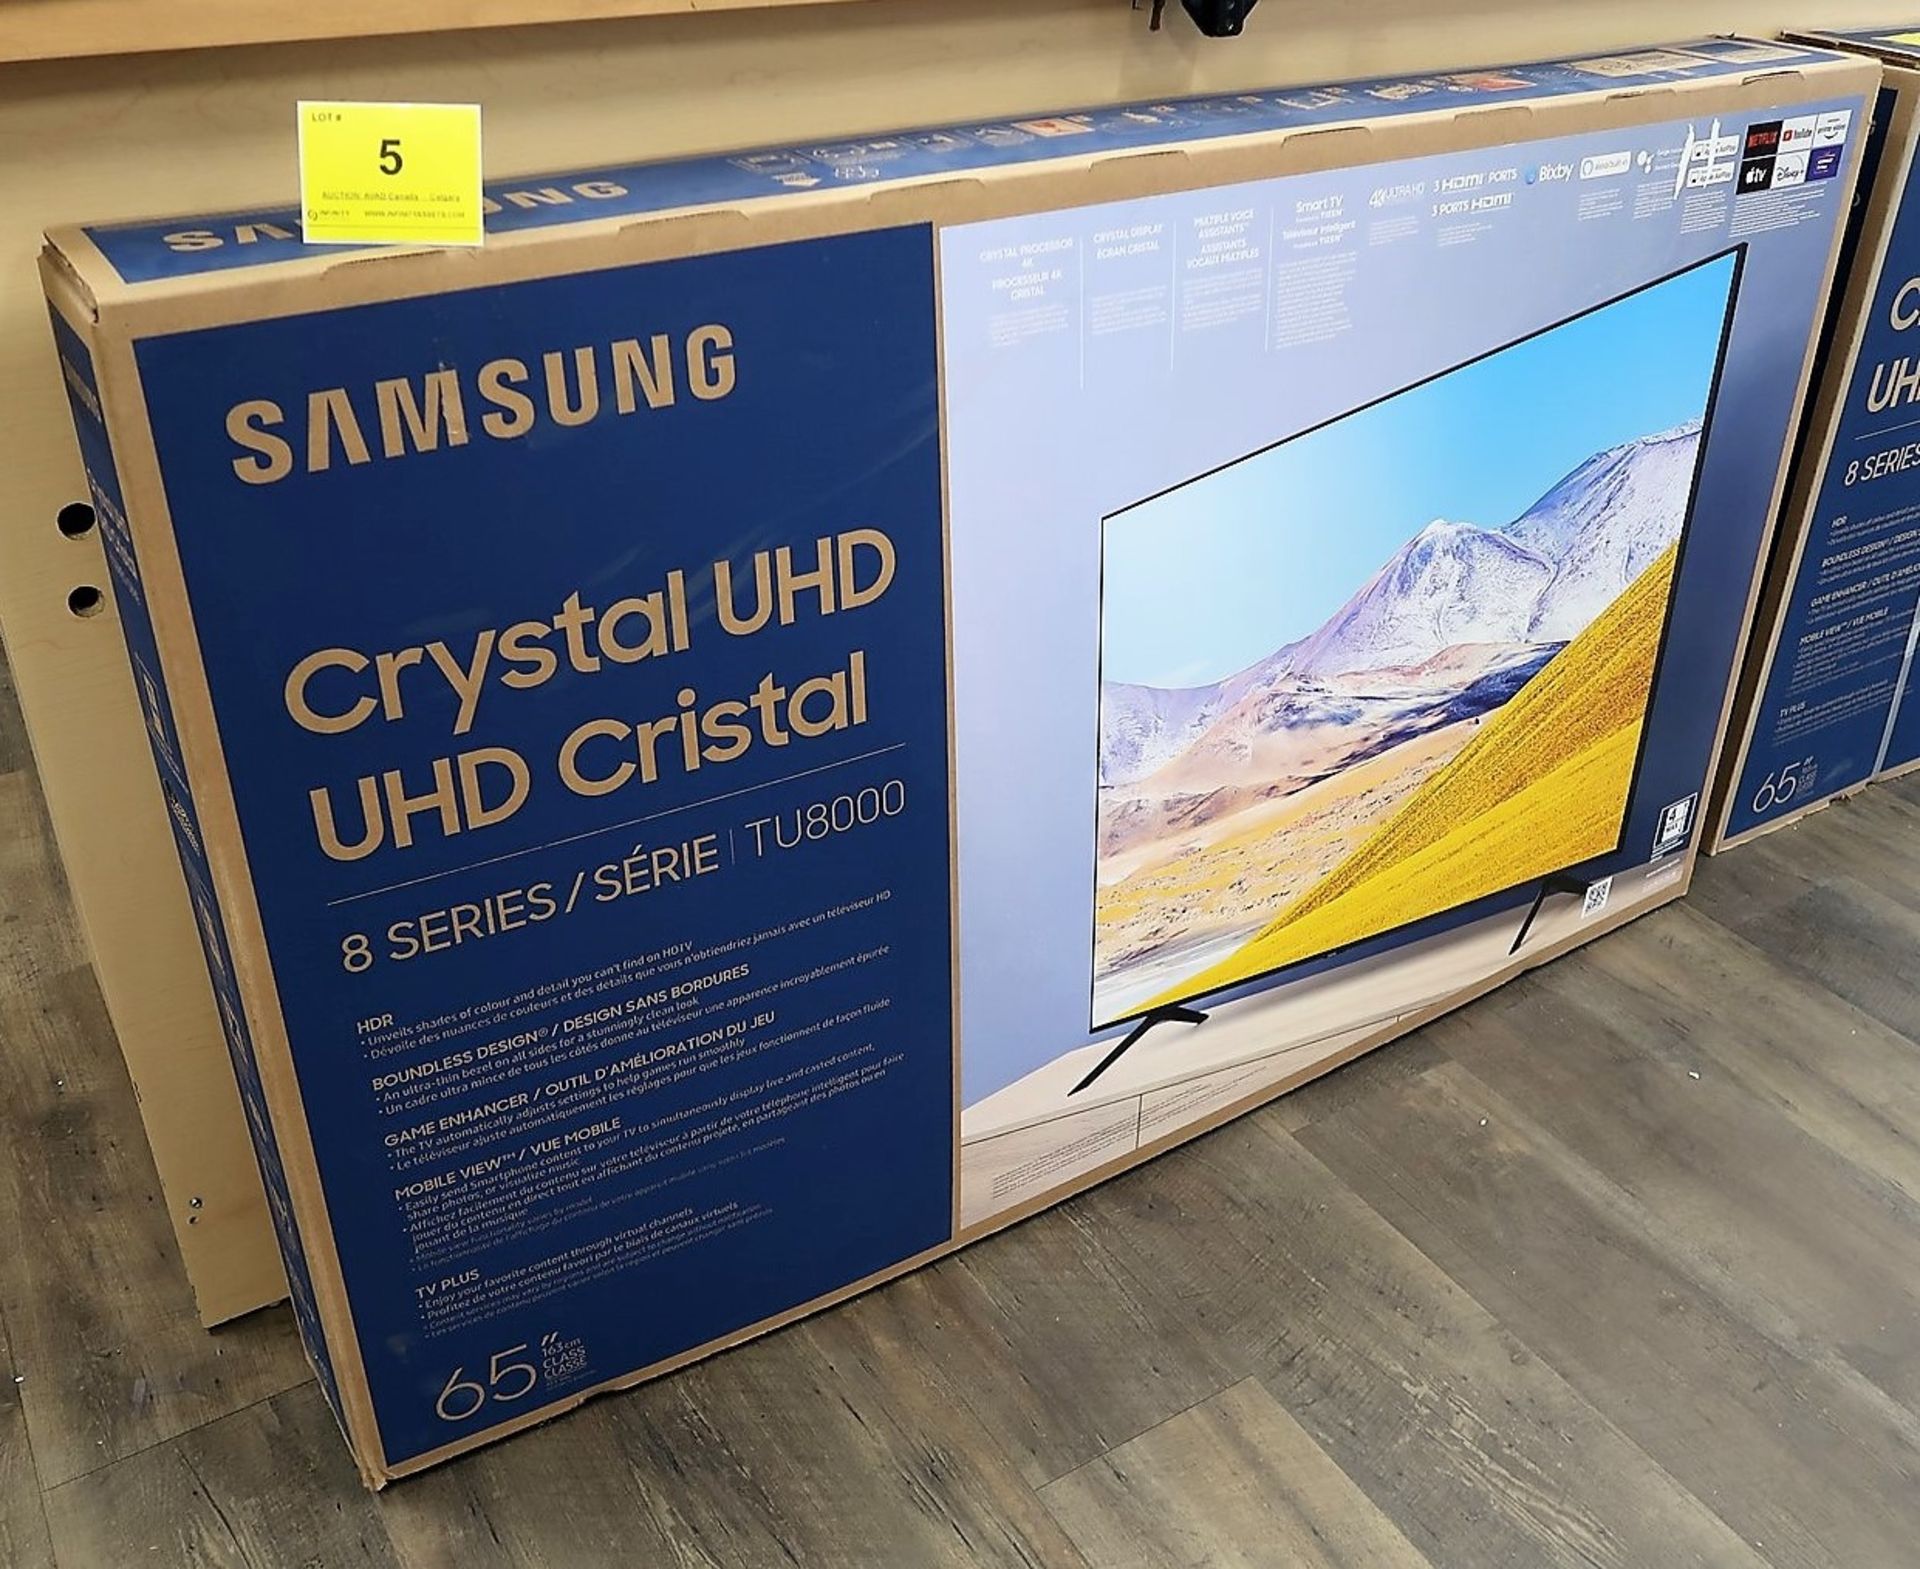 SAMSUNG CRYSTAL UHD, 65 IN. SMART TV, MOD. UN65TV8000F, (BNIB) MSRP $1400